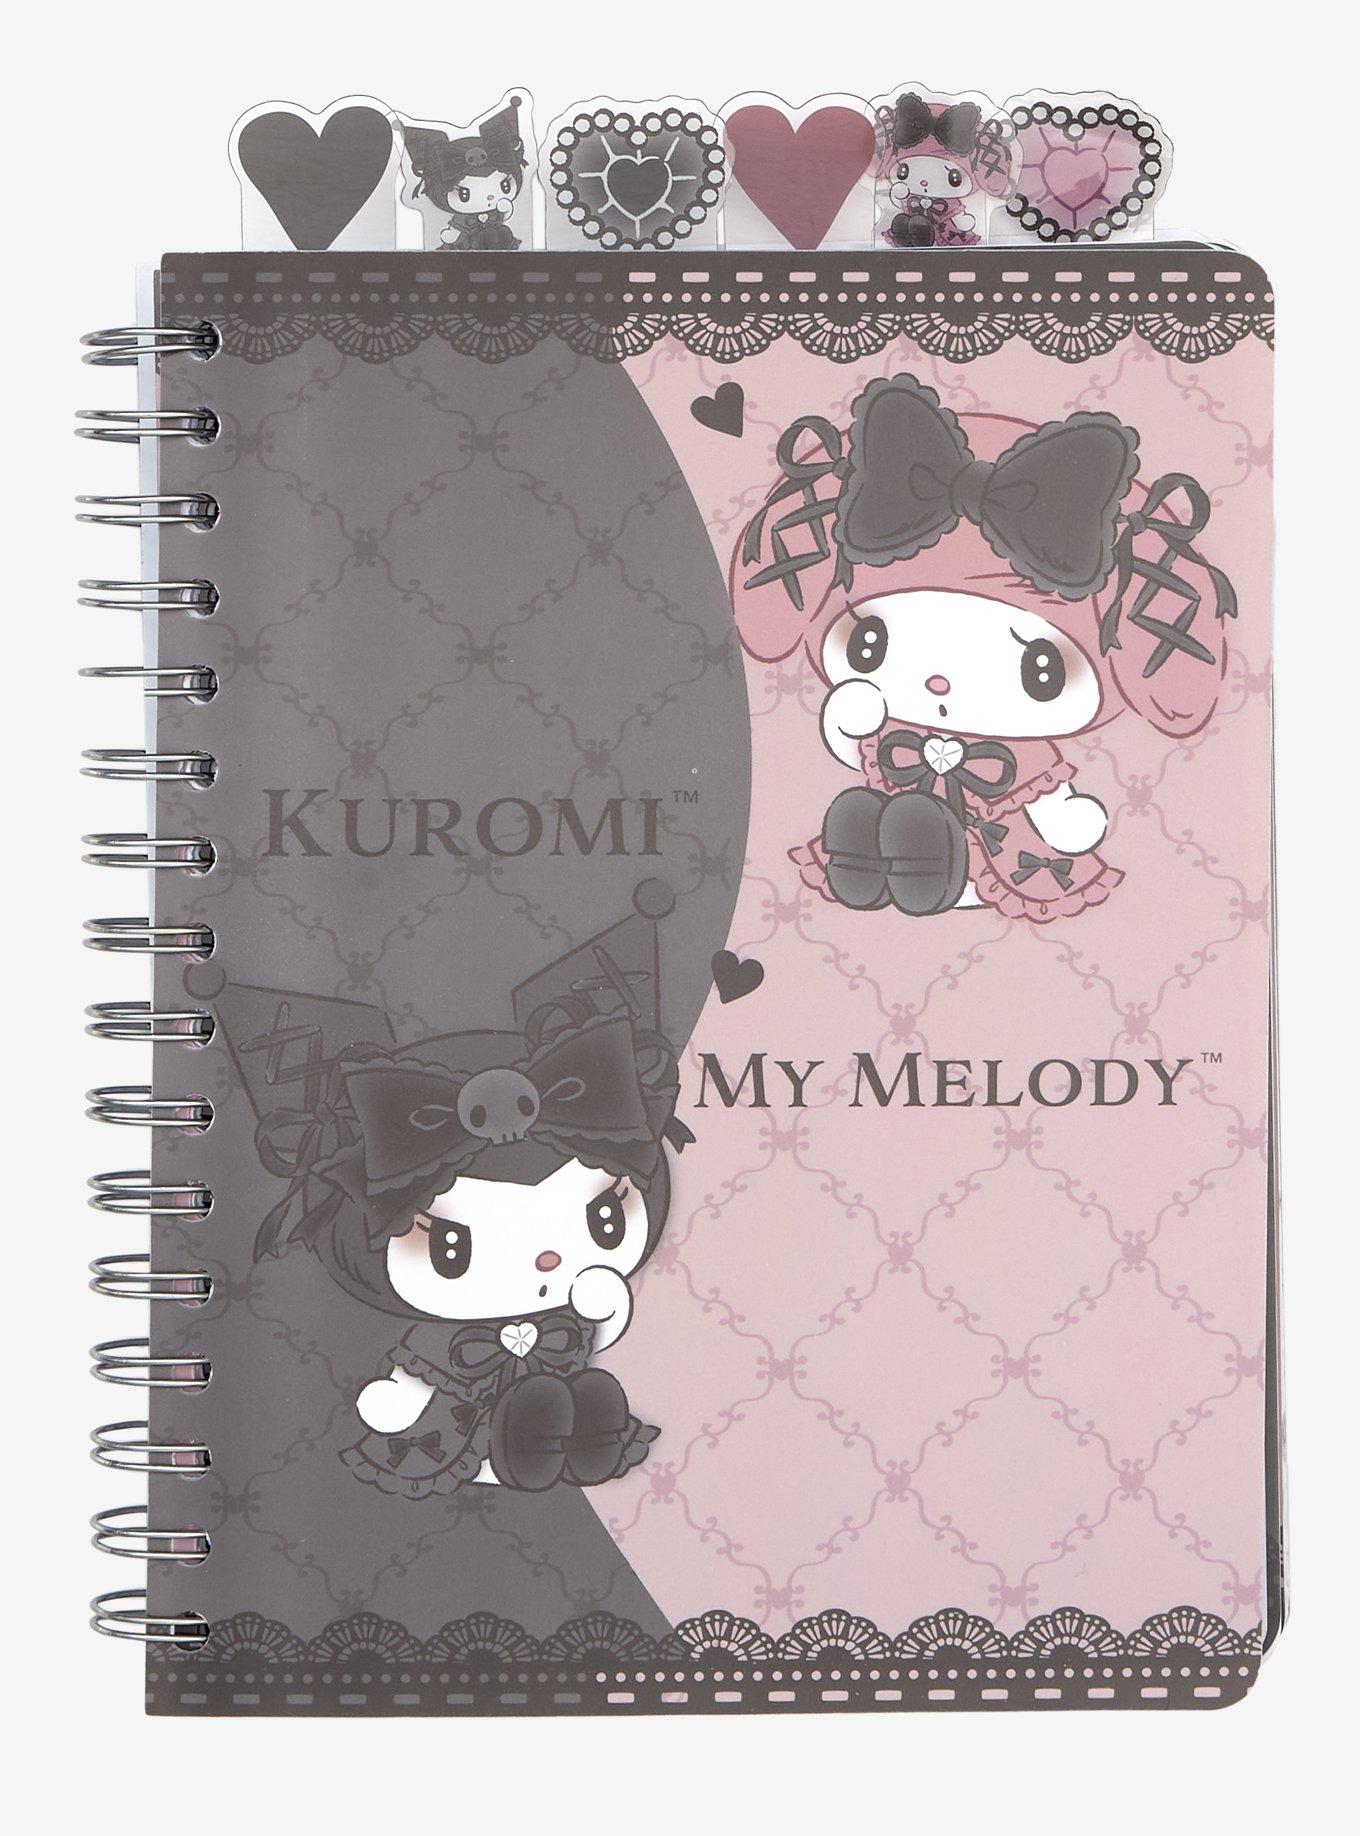 My Melody and Kuromi Halloween Spiral Notebook